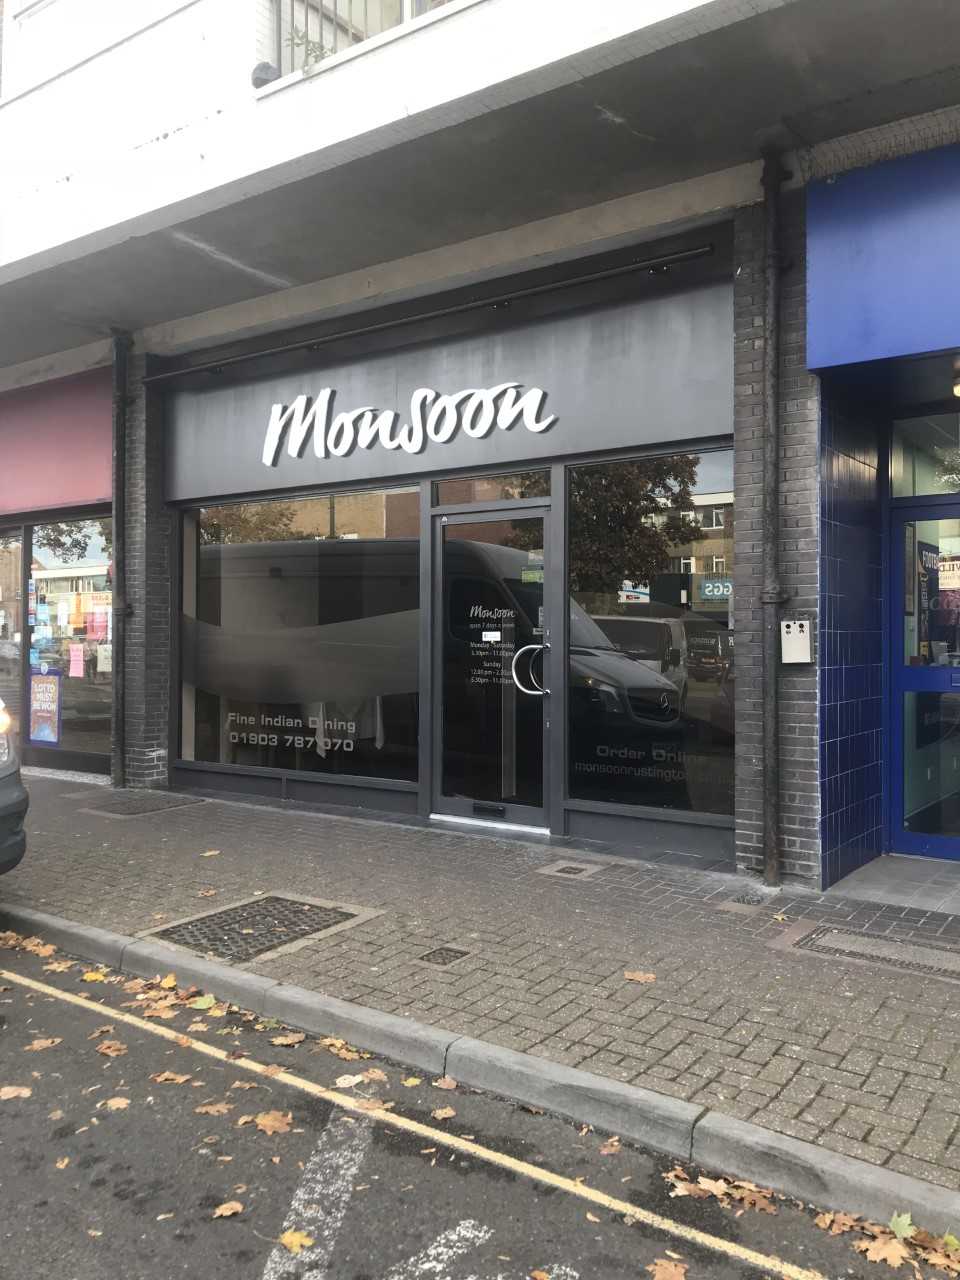 Monsoon Indian Restaurant in Rustington